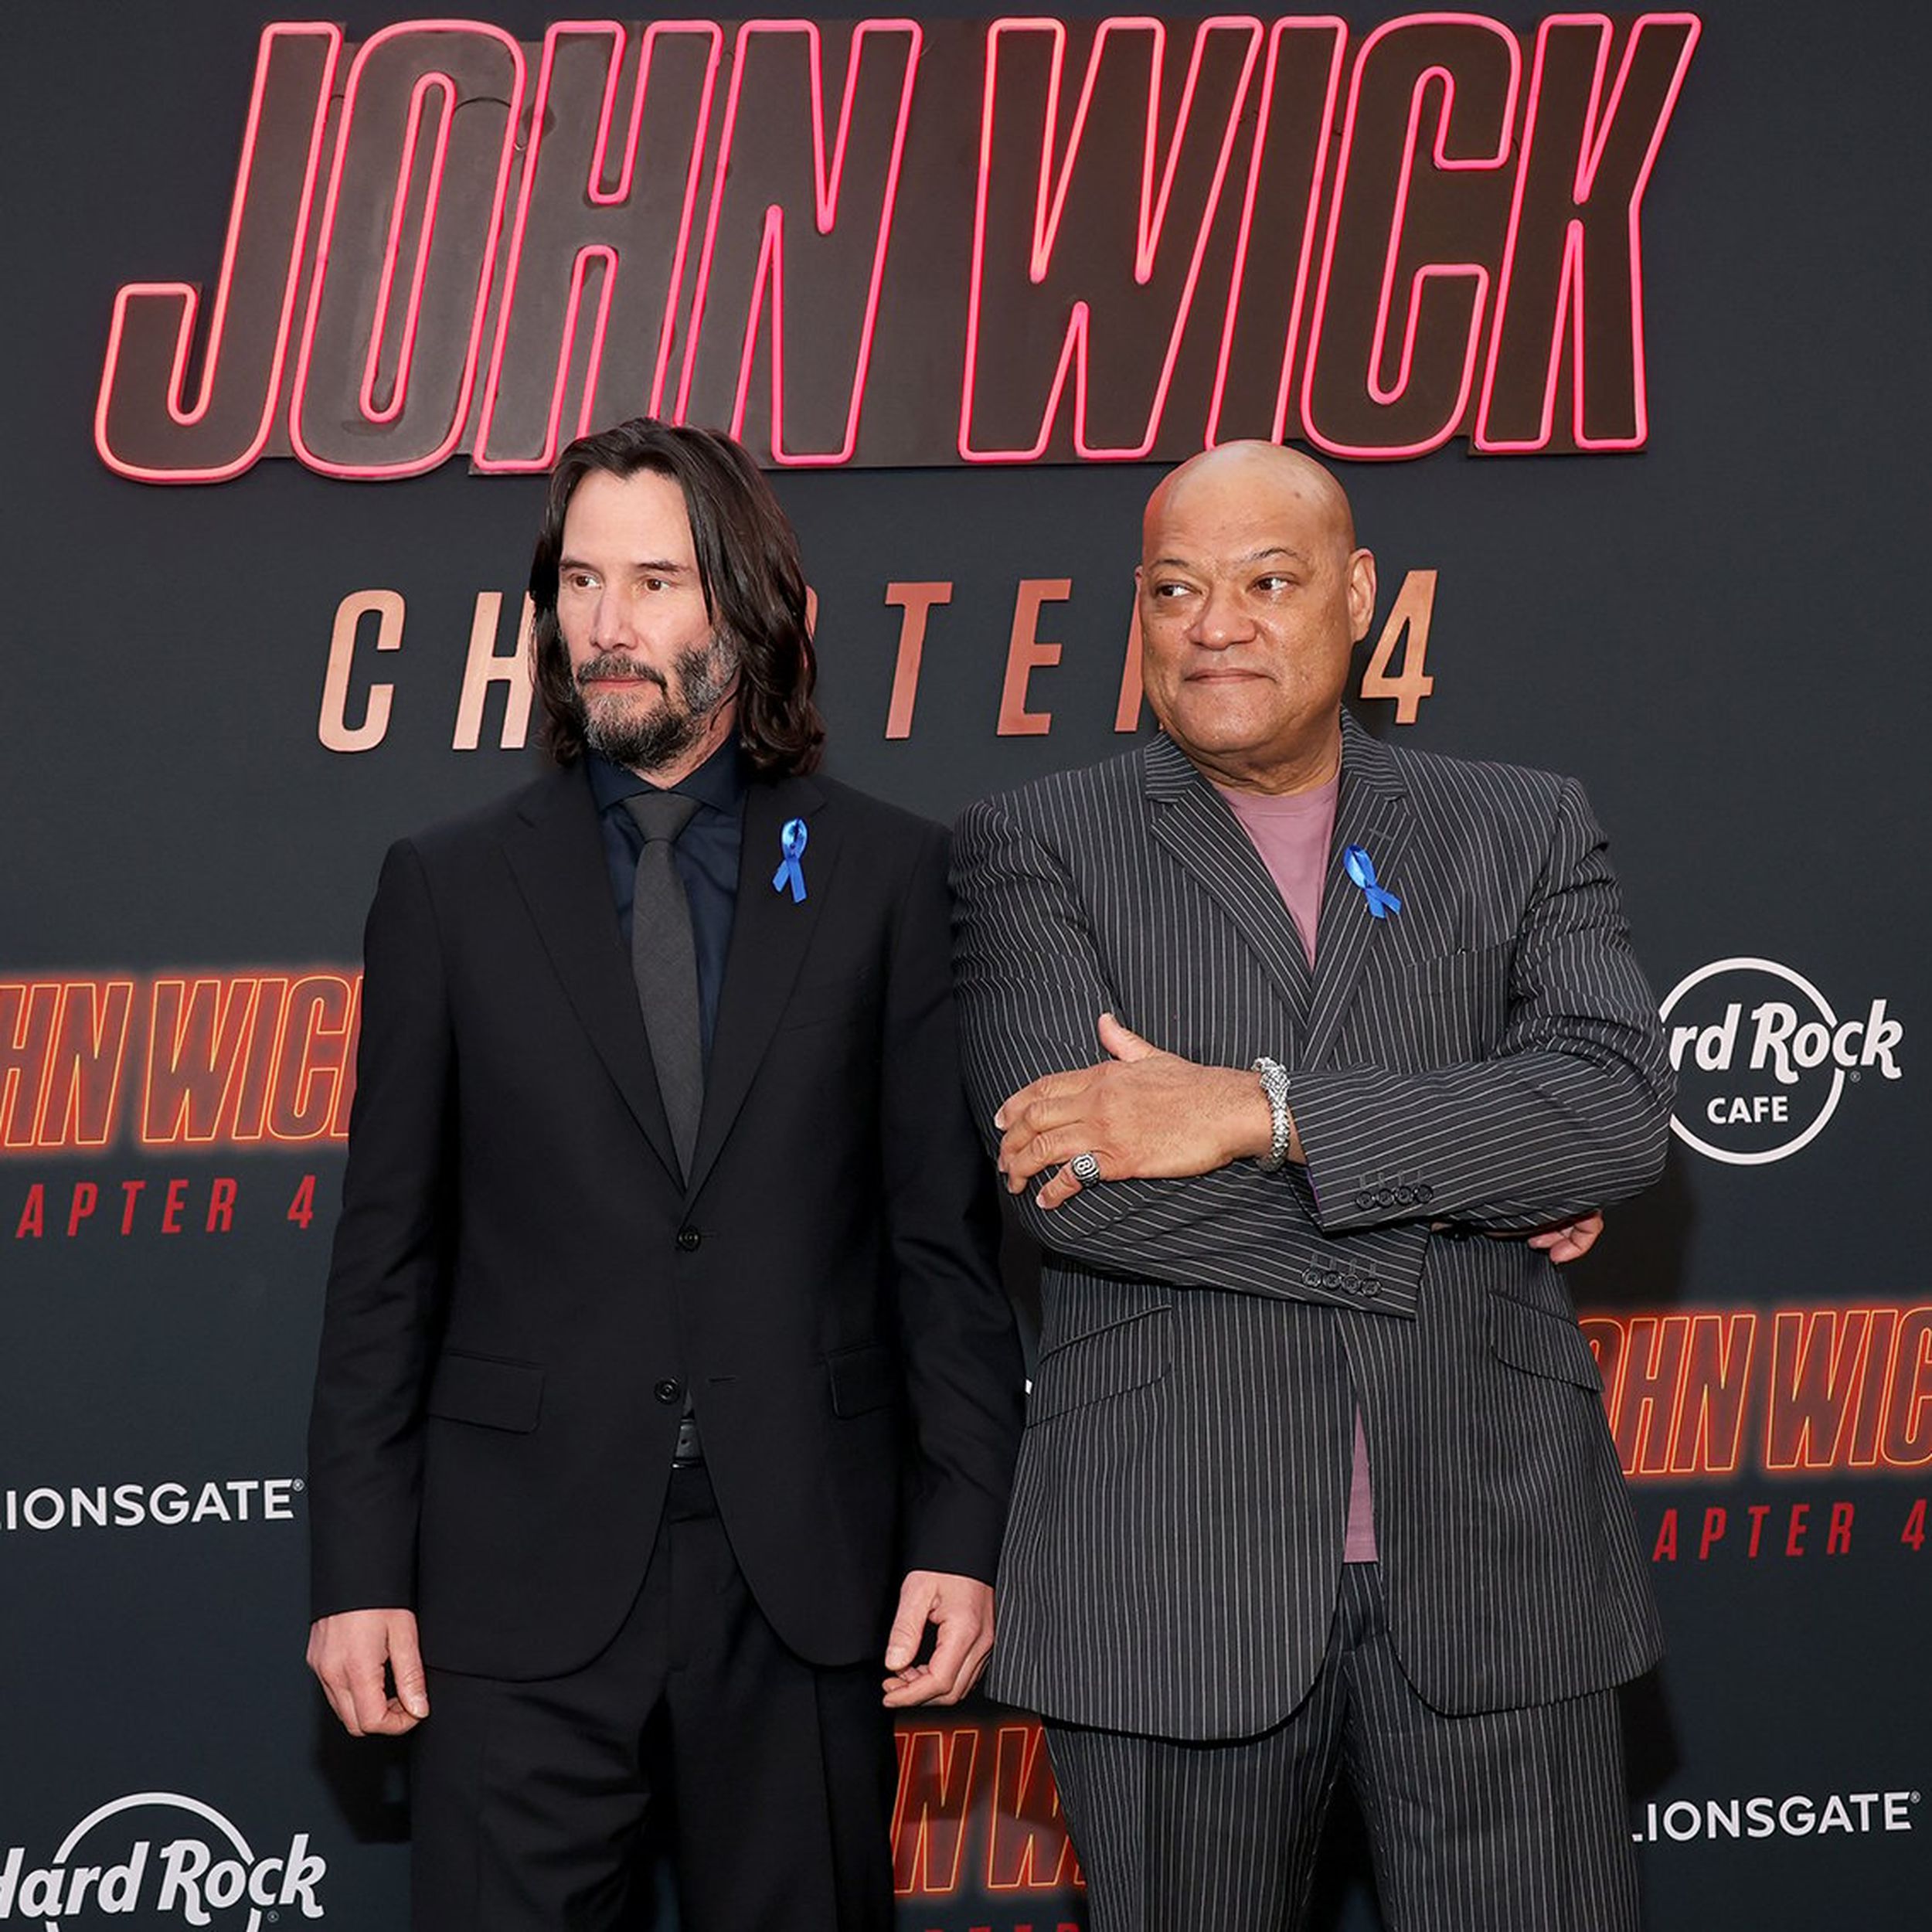 SXSW 2023 Rumor Confirmed: John Wick 4 World Premiere At Paramount